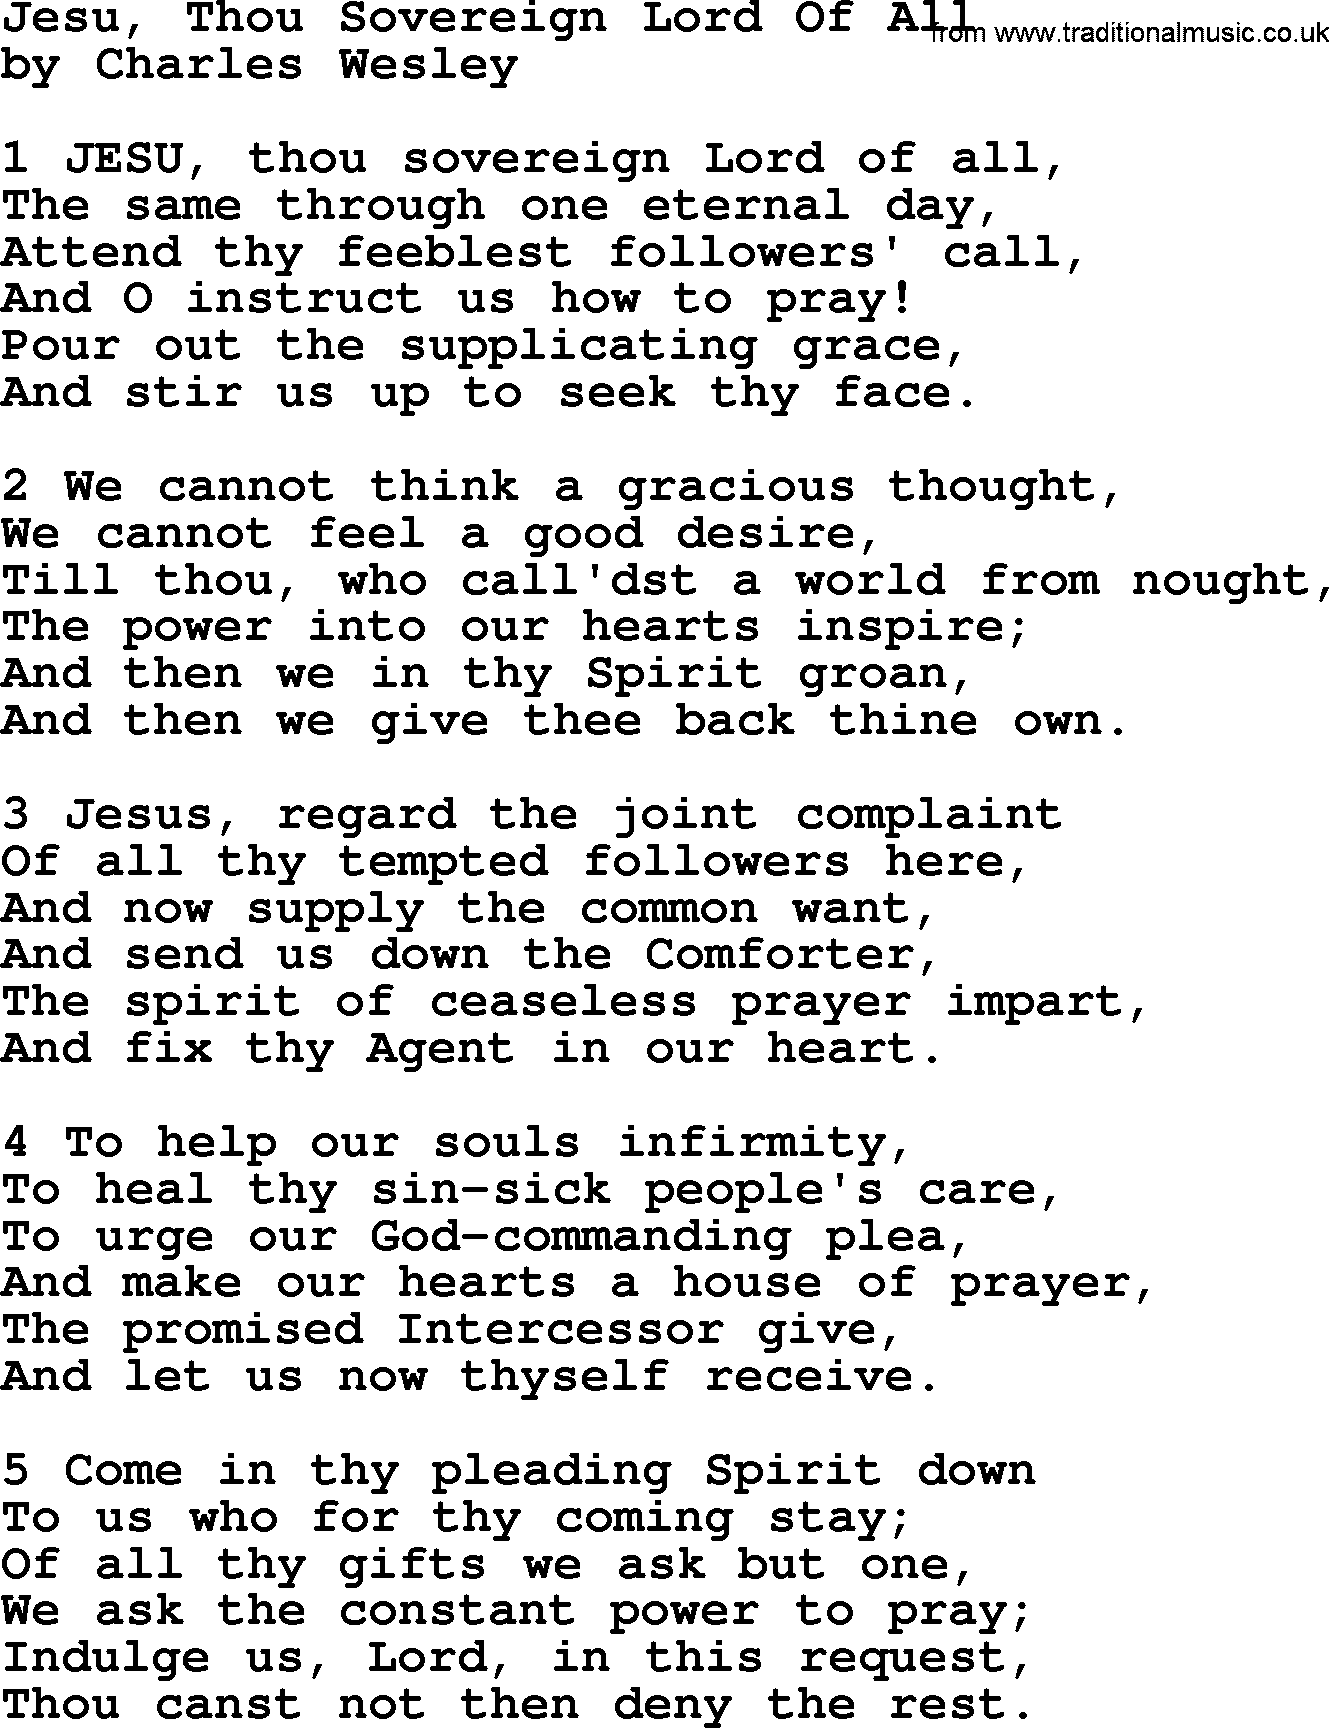 Charles Wesley hymn: Jesu, Thou Sovereign Lord Of All, lyrics